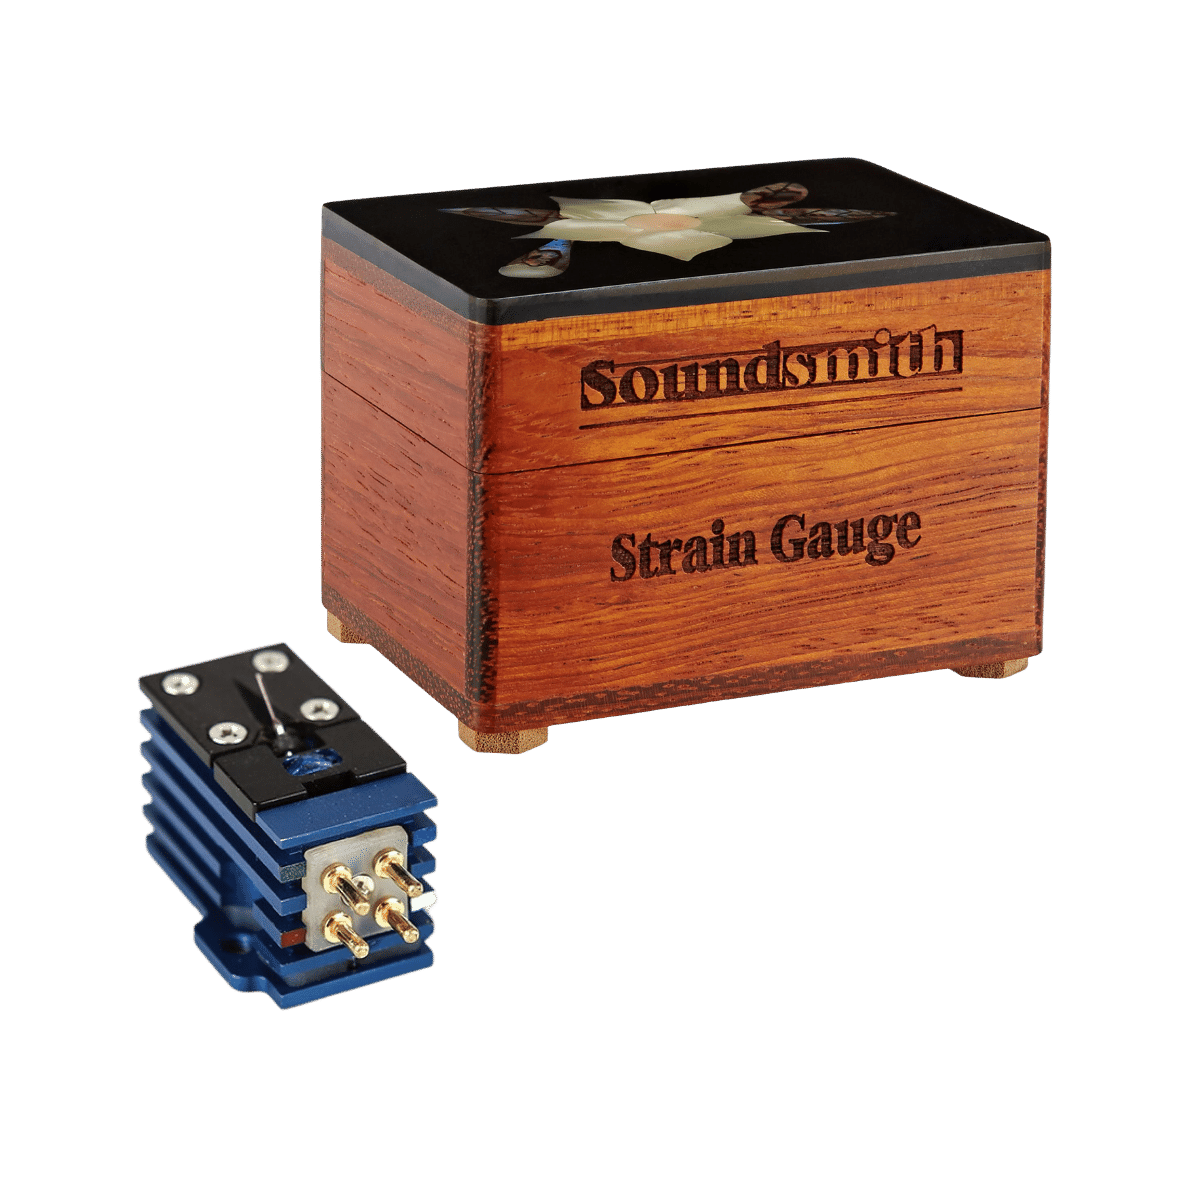 Soundsmith SG-210 Strain Gauge System